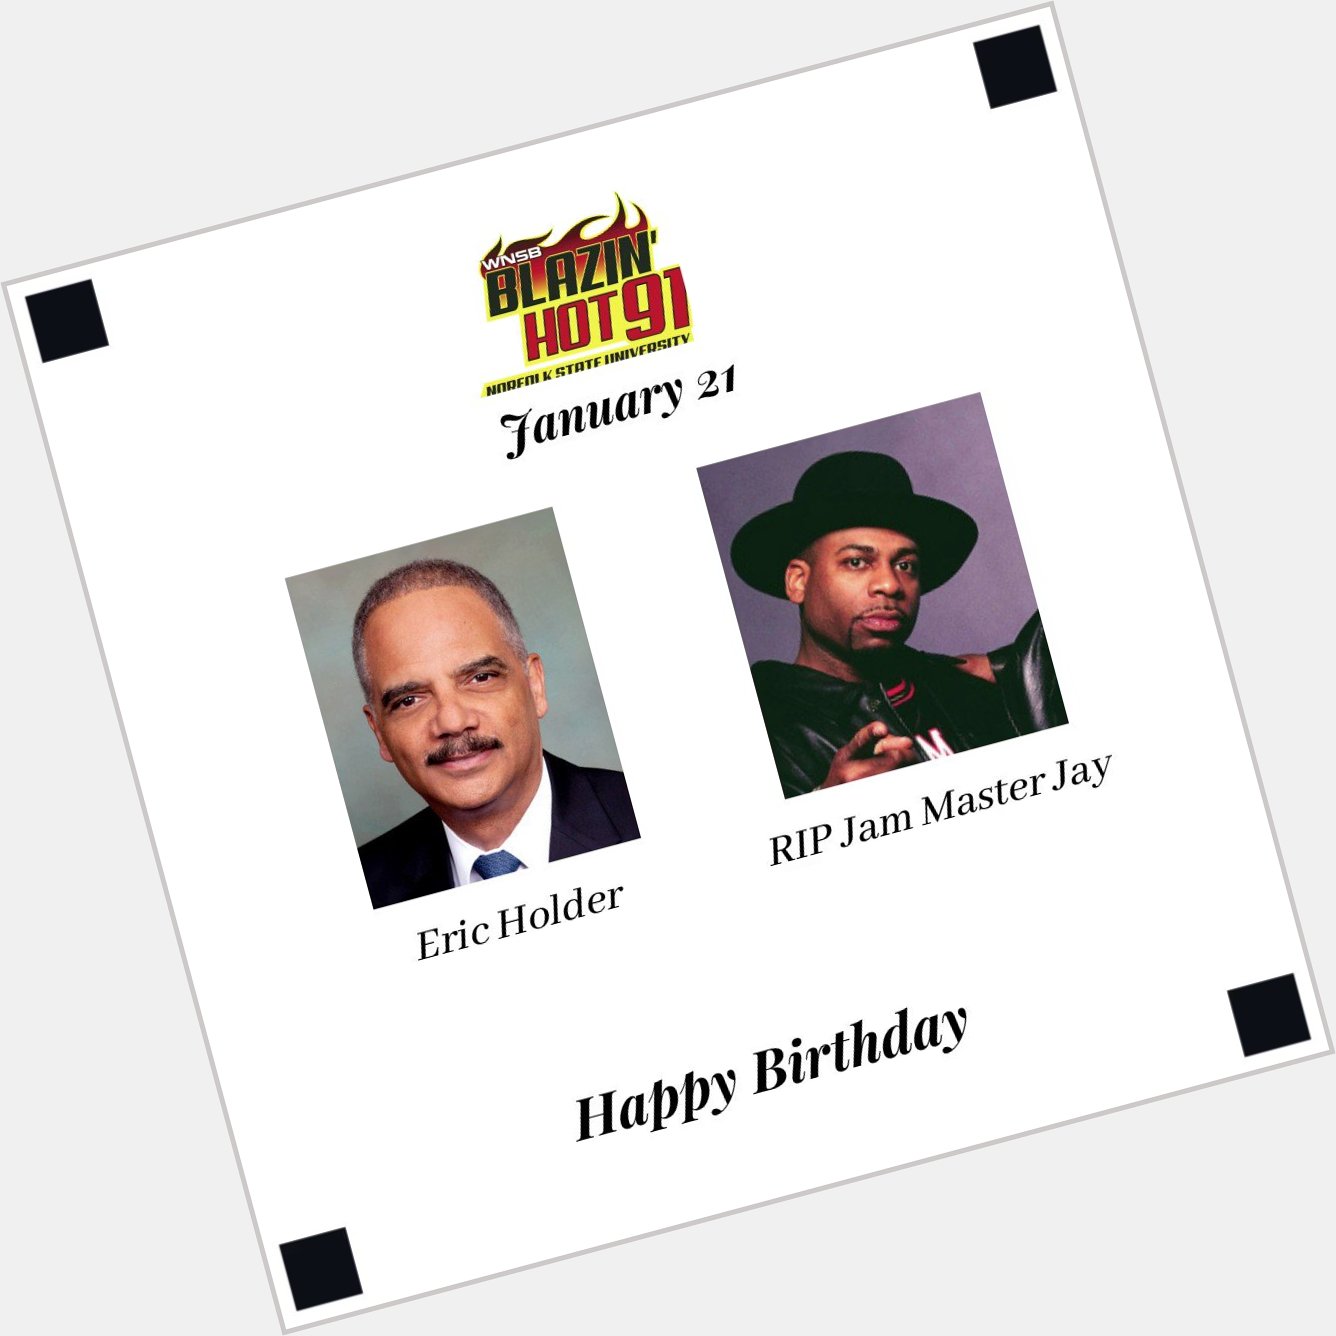 Happy Blazin\ Hot birthday to Eric Holder & RIP Jam Master Jay    